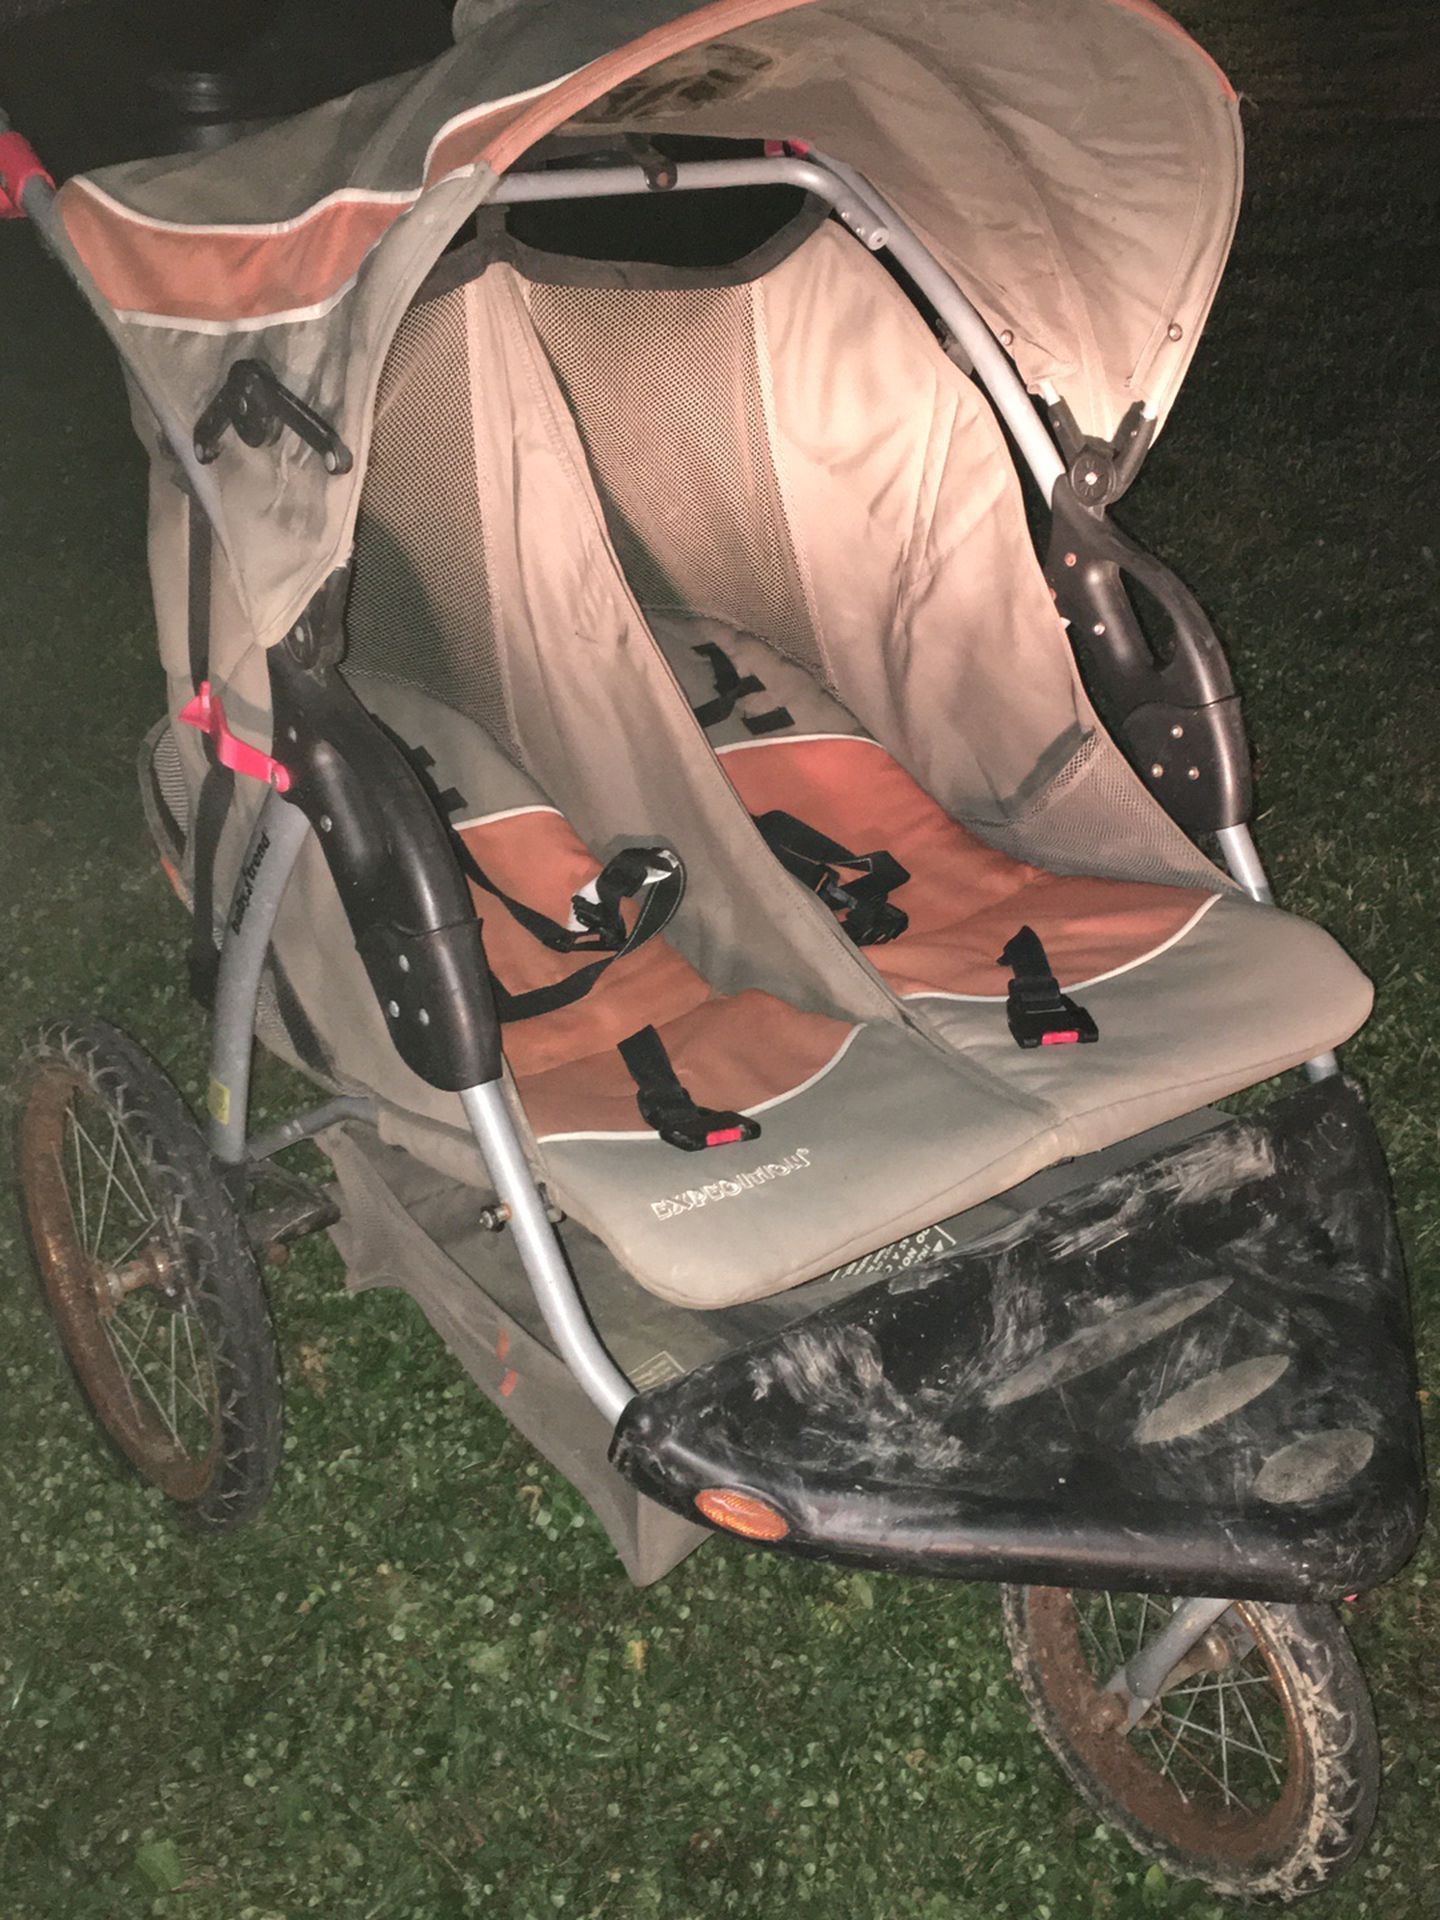 Double stroller - Baby Trend